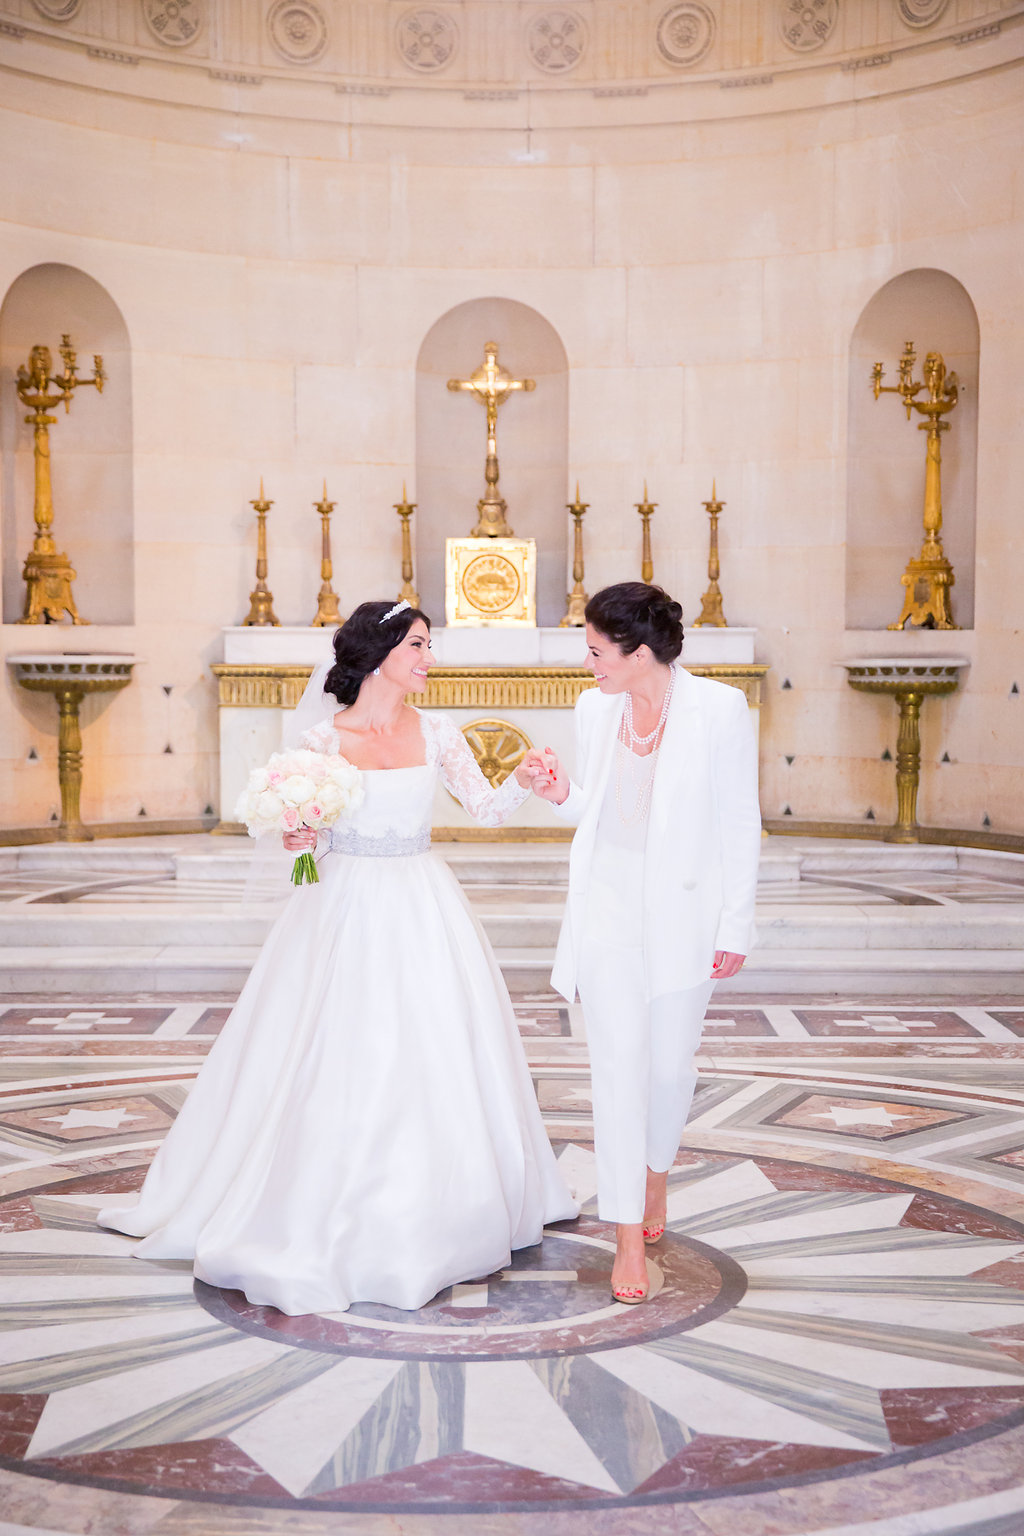 Wedding at chapelle expiatoire paris venue elope in paris audrey photos